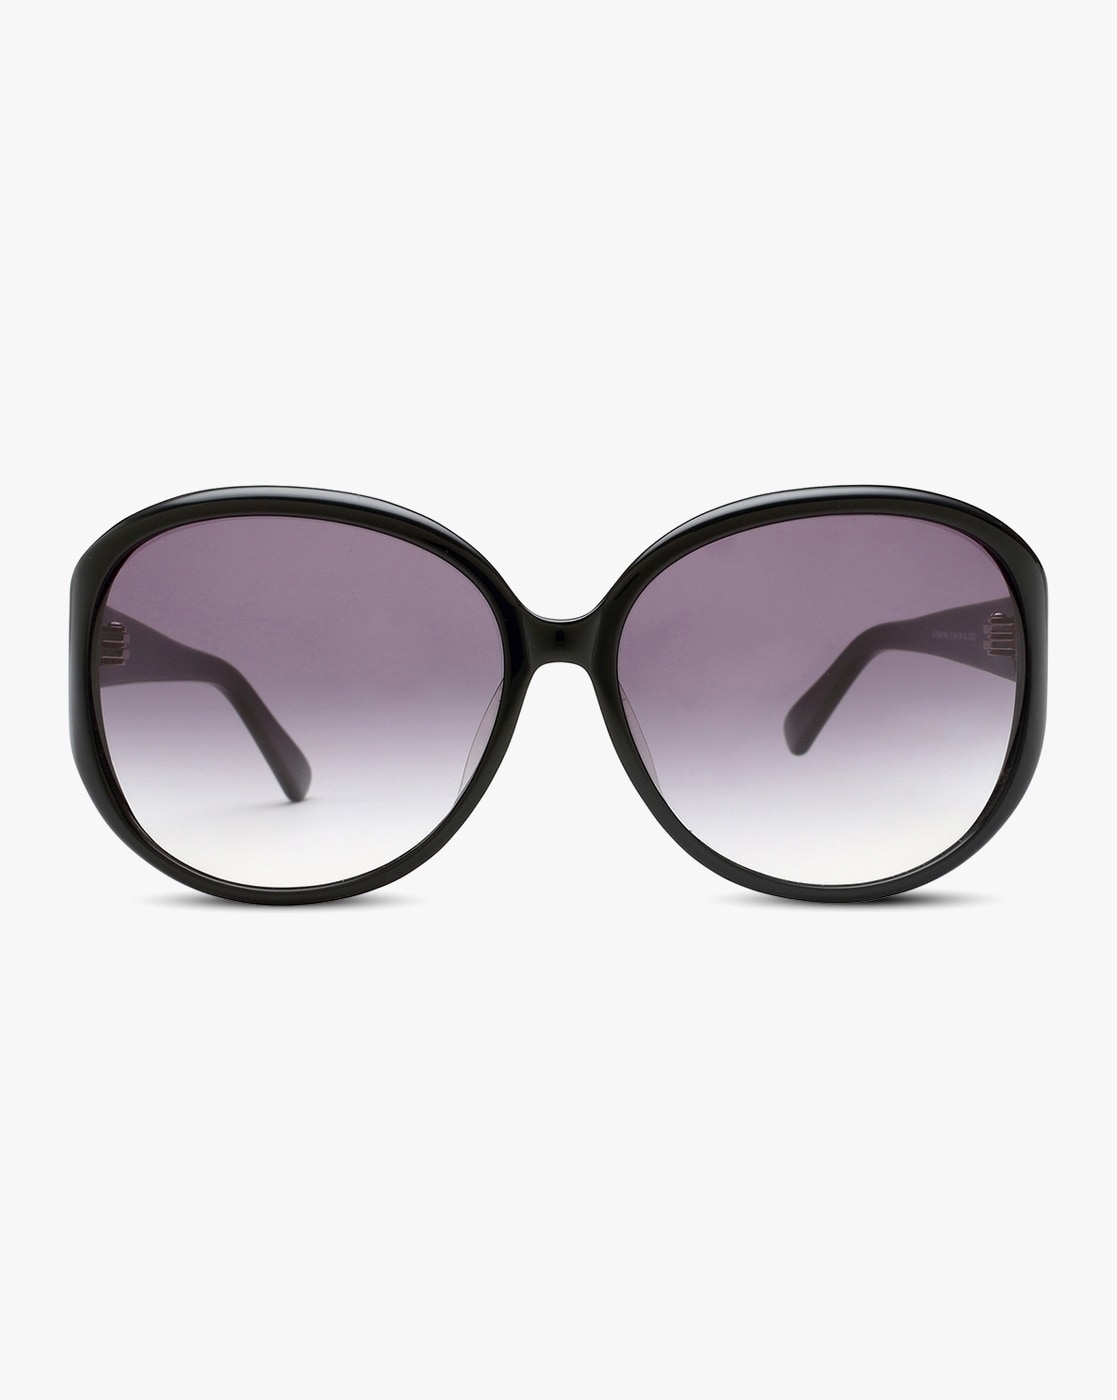 Buy Calvin Klein Fashion women's Sunglasses CK19313S-008 - Ashford.com